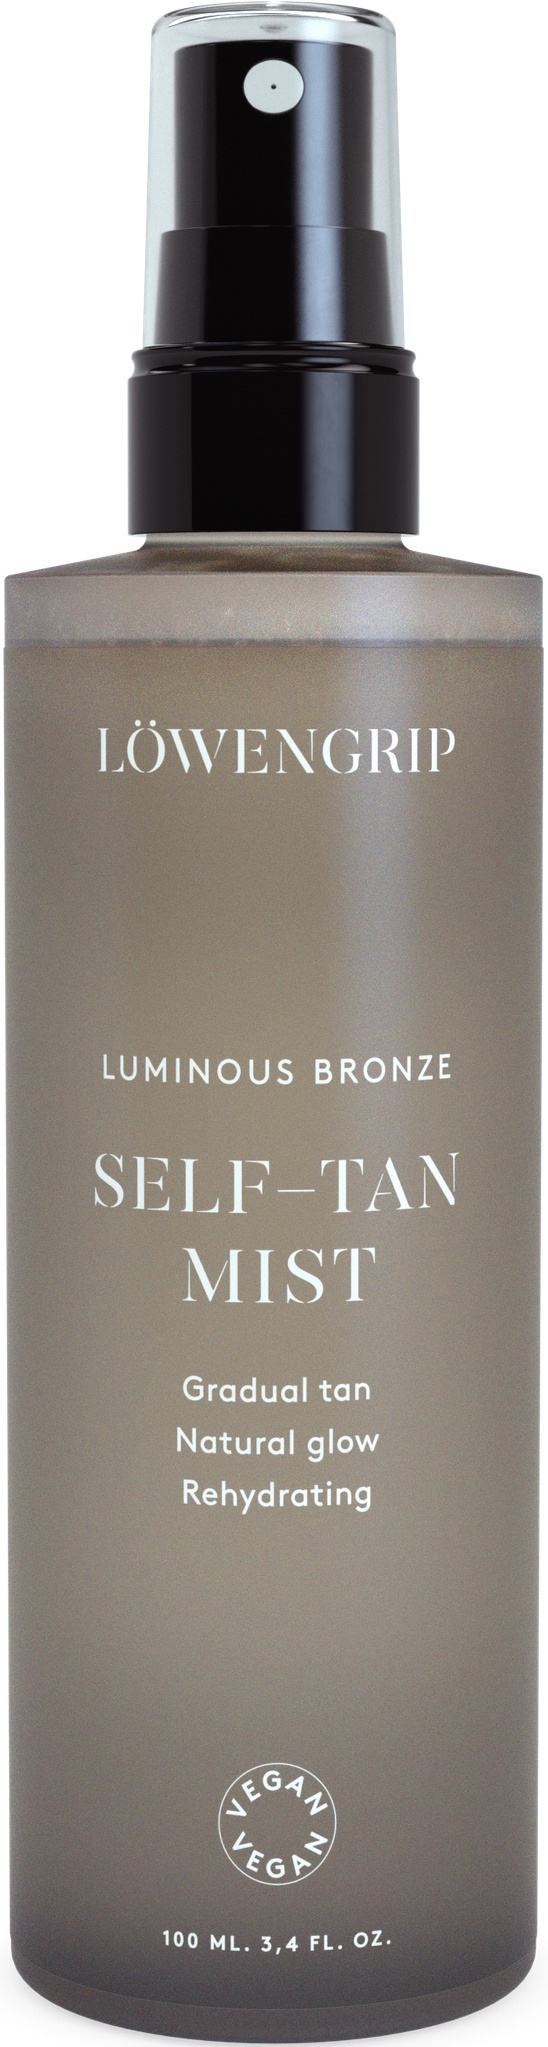 Löwengrip Luminous Bronze - Self-tan Mist